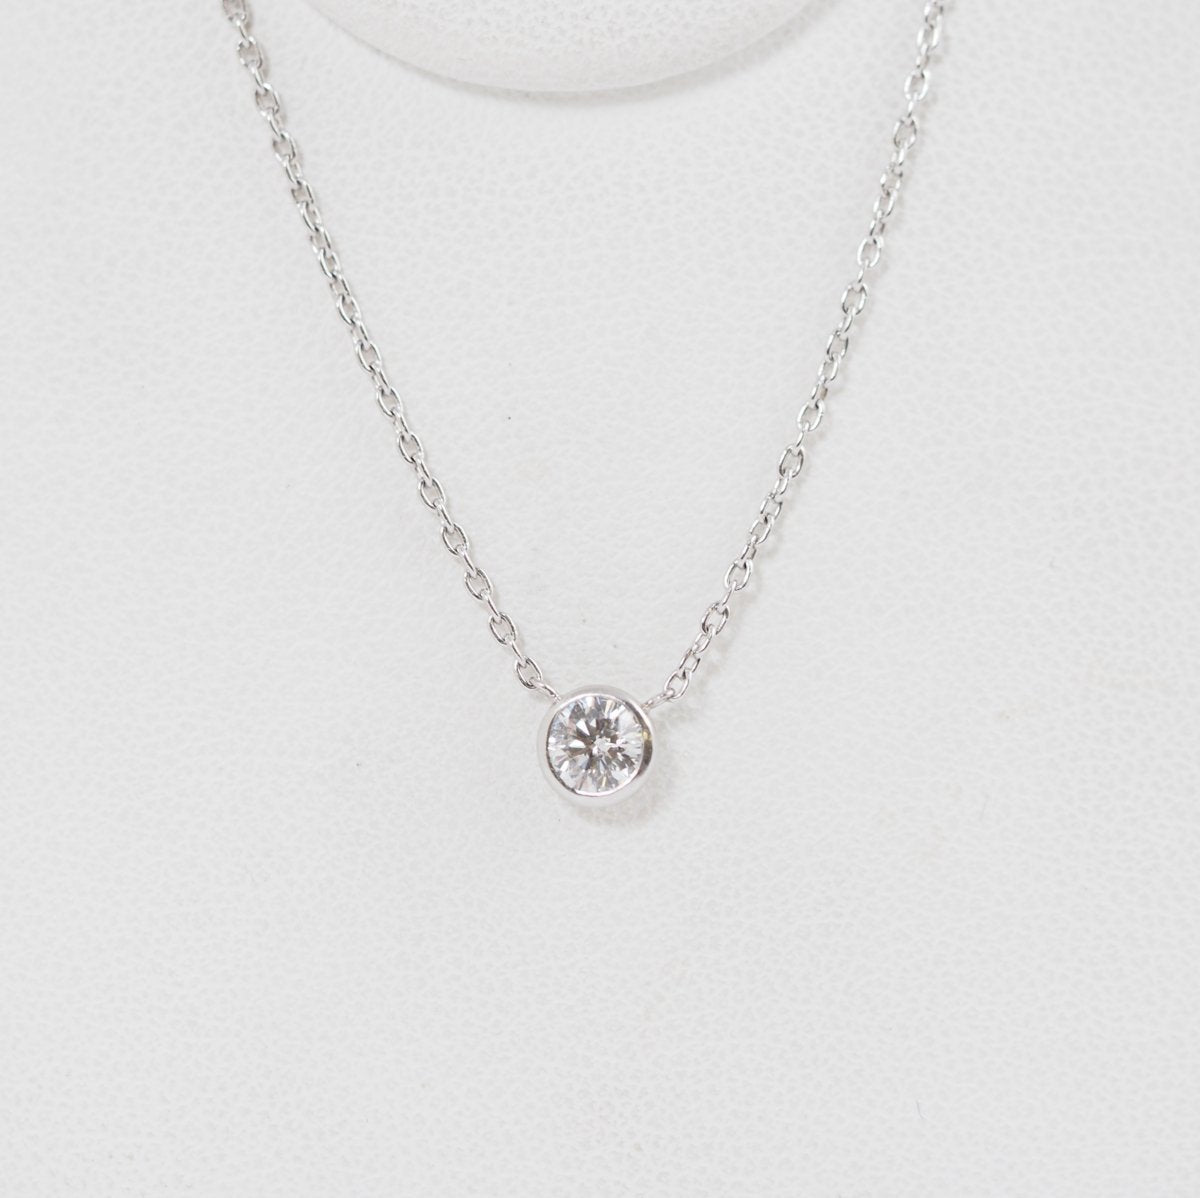 VENDOME AOYAMA Pt900/850 1 diamond 0.27ct necklace with case 